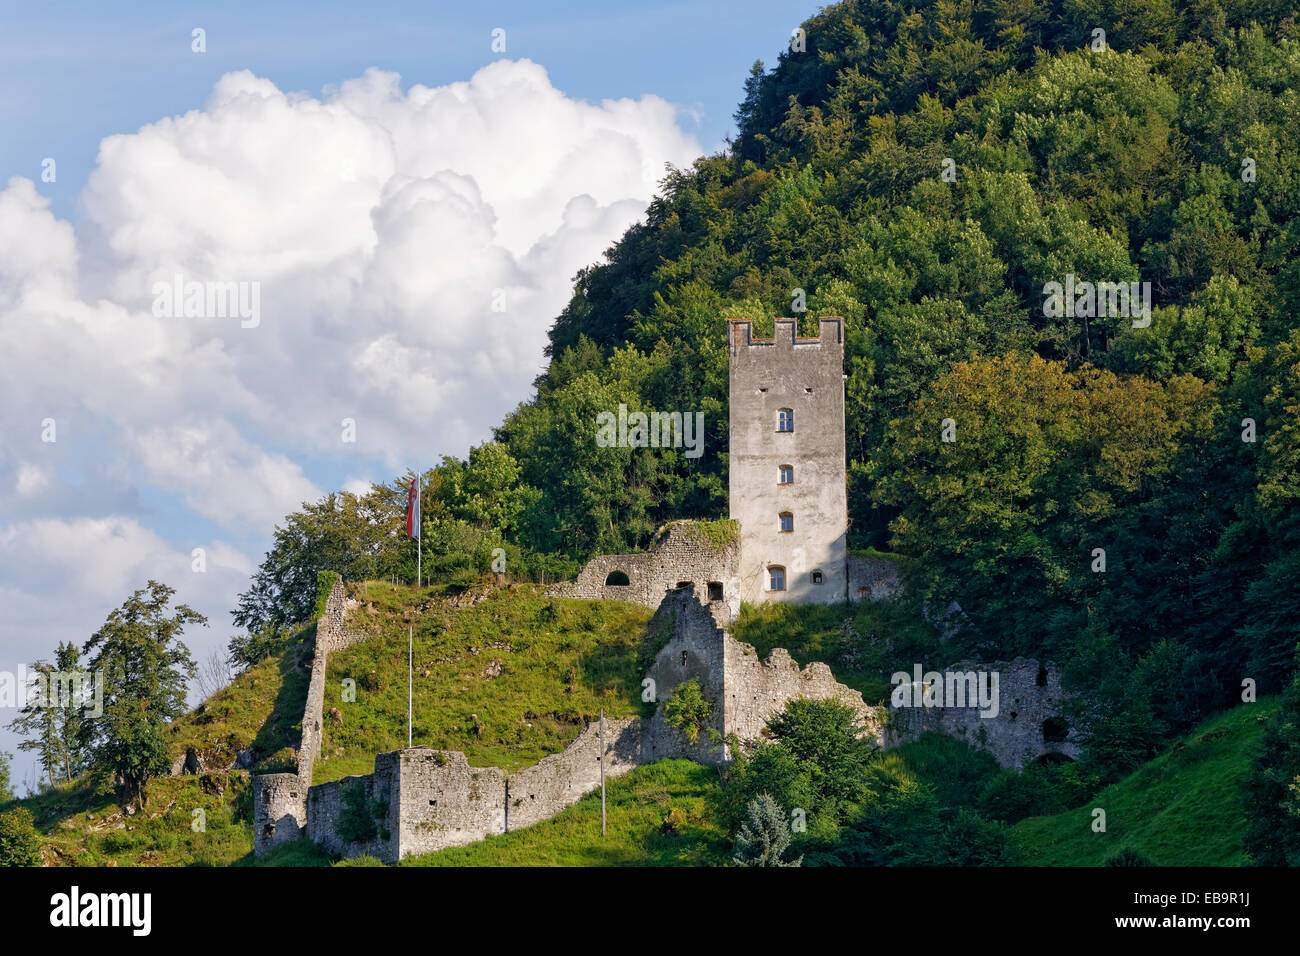 Falkenstein Castle ruins, Flintsbach am Inn, Mangfall mountains, Upper Bavaria, Bavaria, Germany Stock Photo